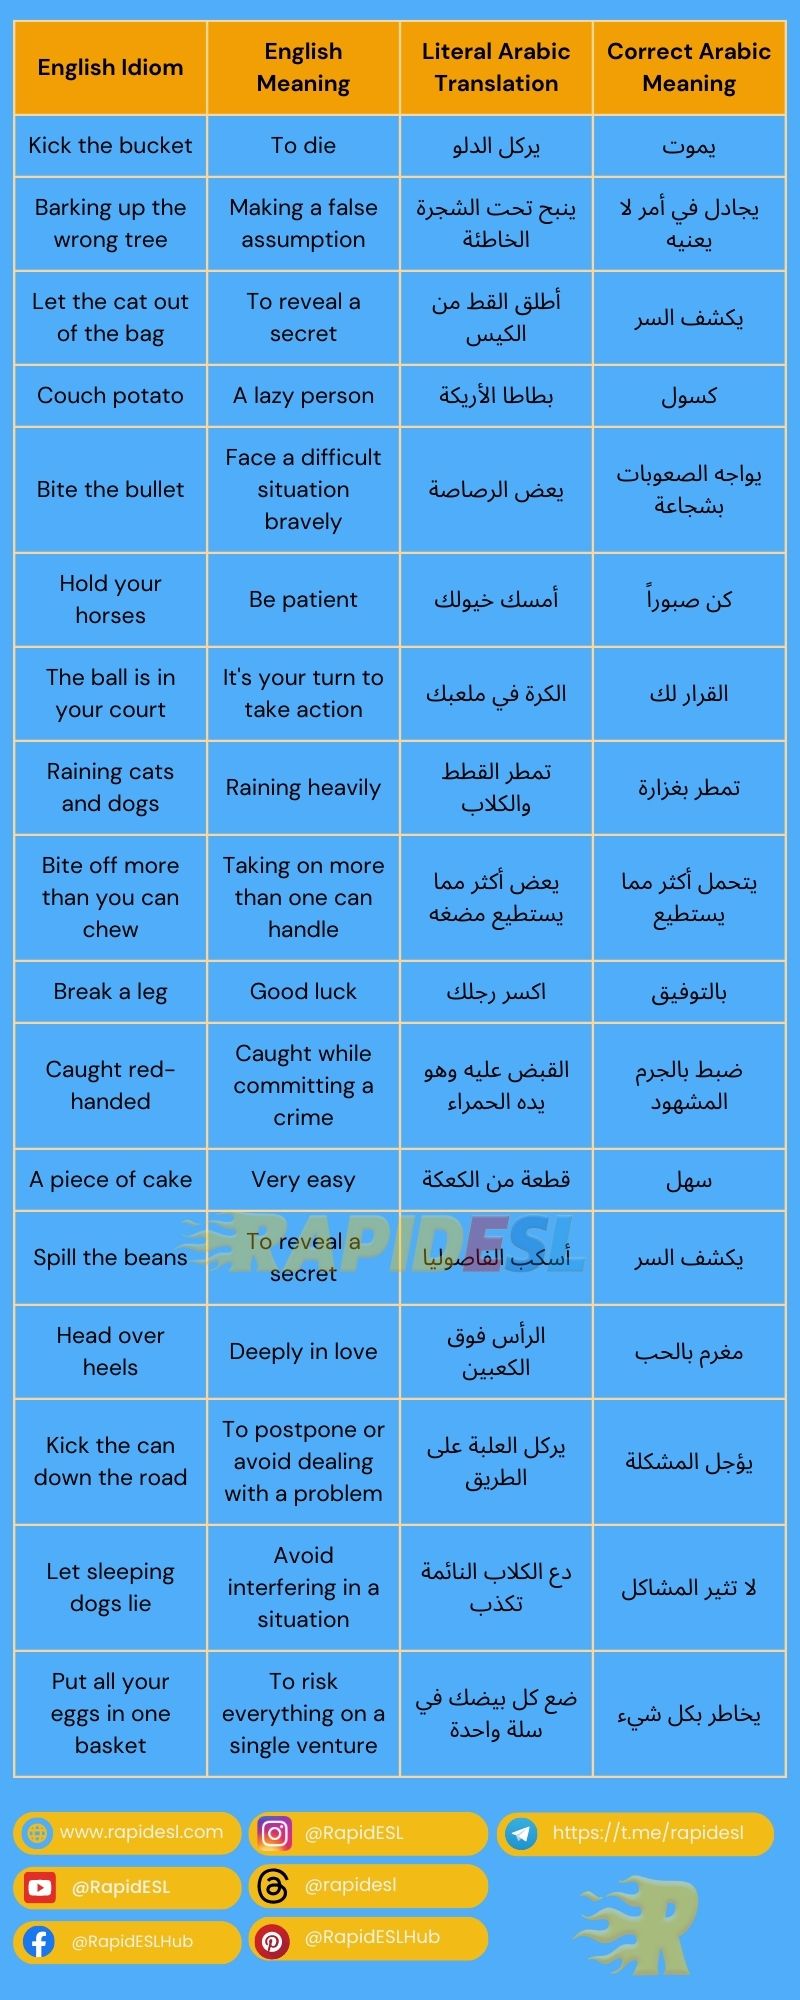 english-in-arabic-17-english-idioms-that-have-funny-arabic-translations